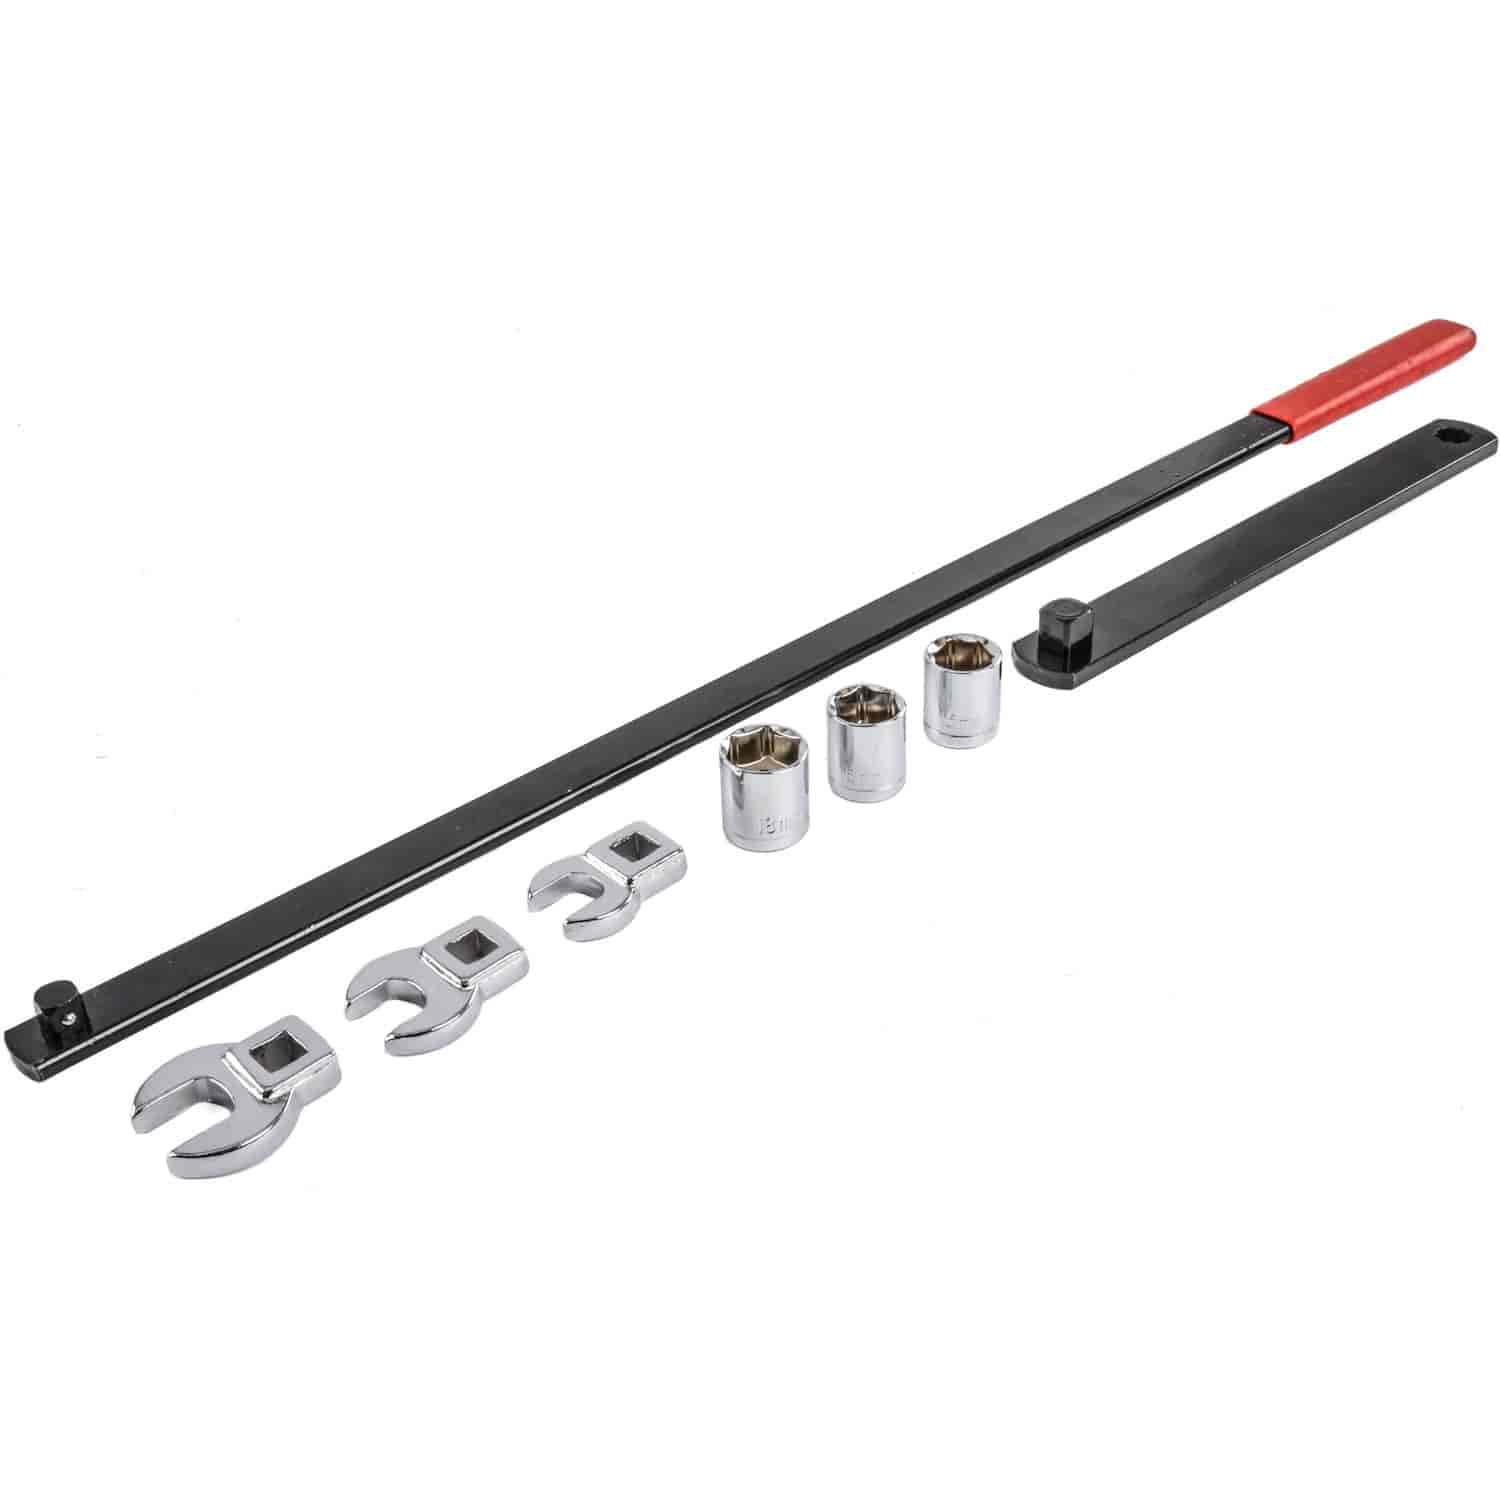 Serpentine Belt Tool Fits: (idler pulleys requiring) 15mm,